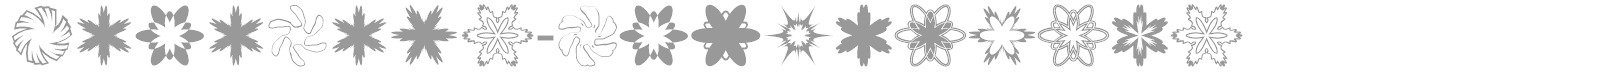 MiniPics-Snowflakes font preview